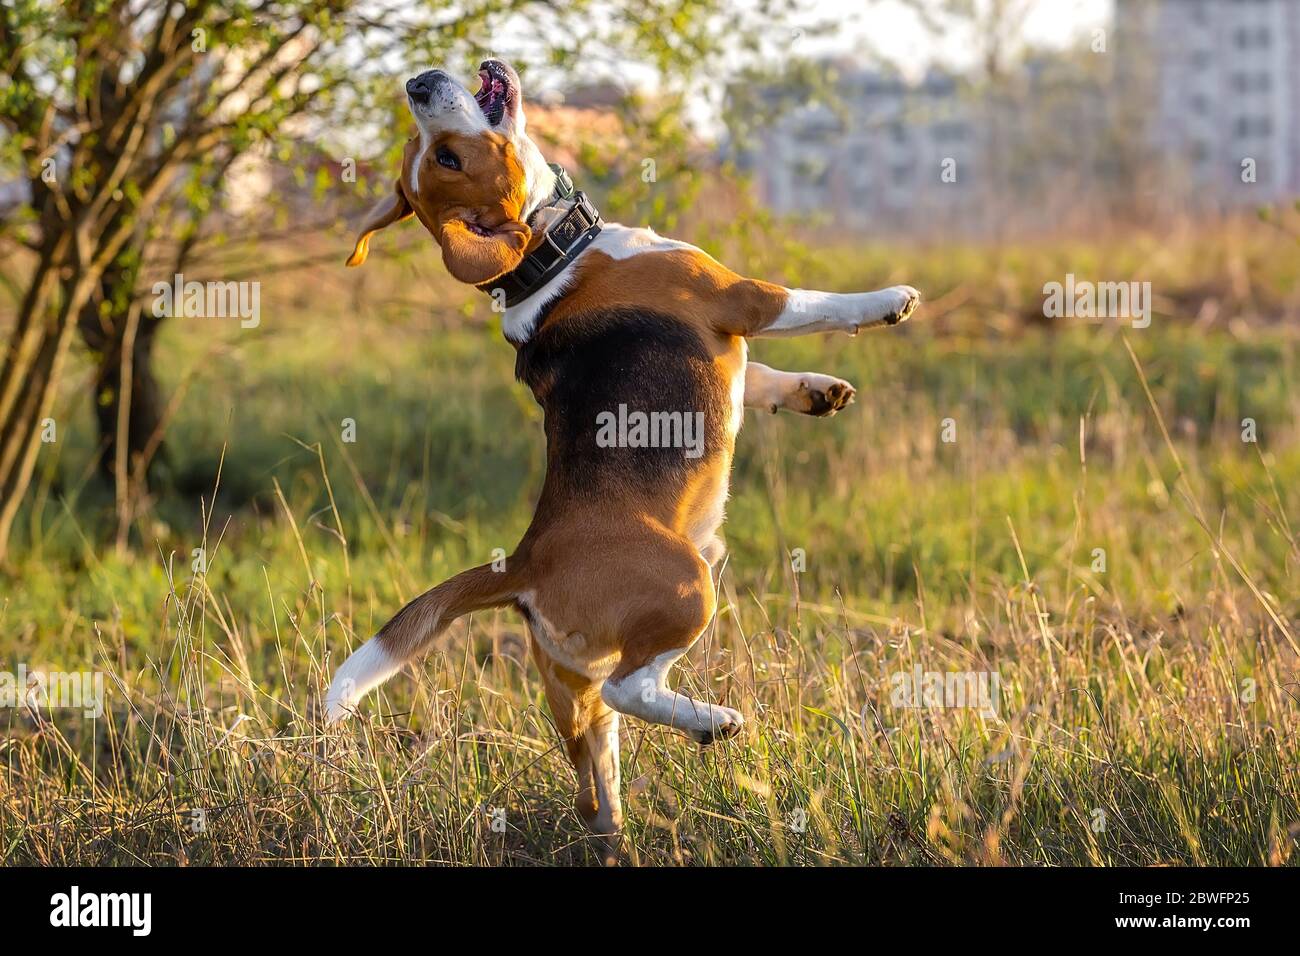 Lindo perro beagle al aire libre Foto de stock